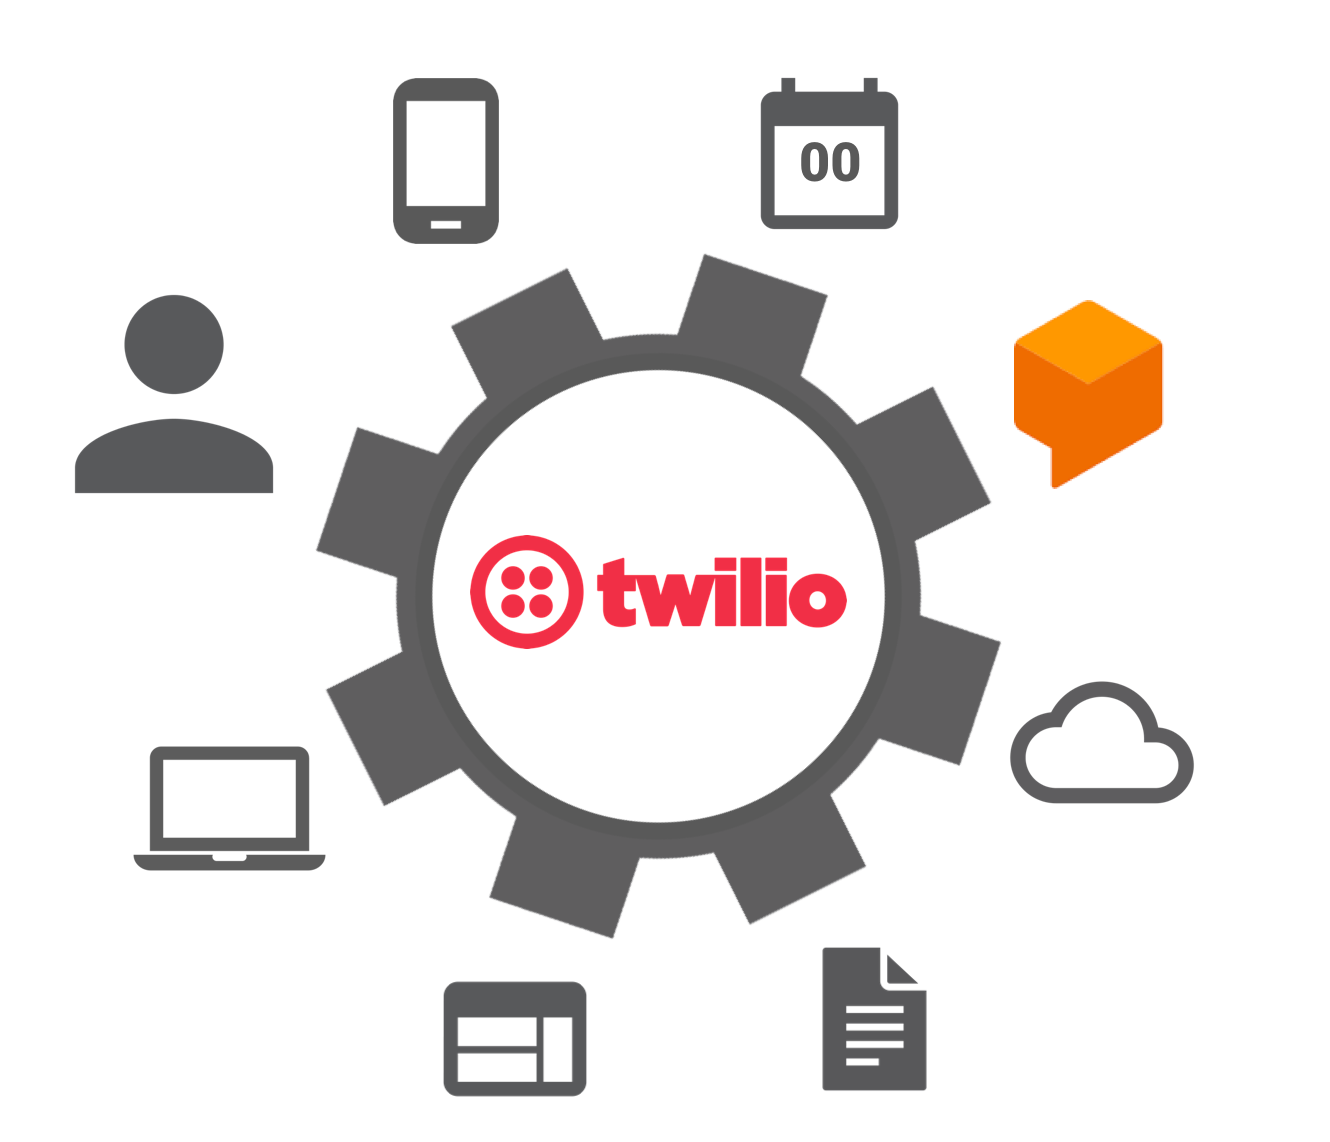  Twilio's SMS IntegrationSurat city